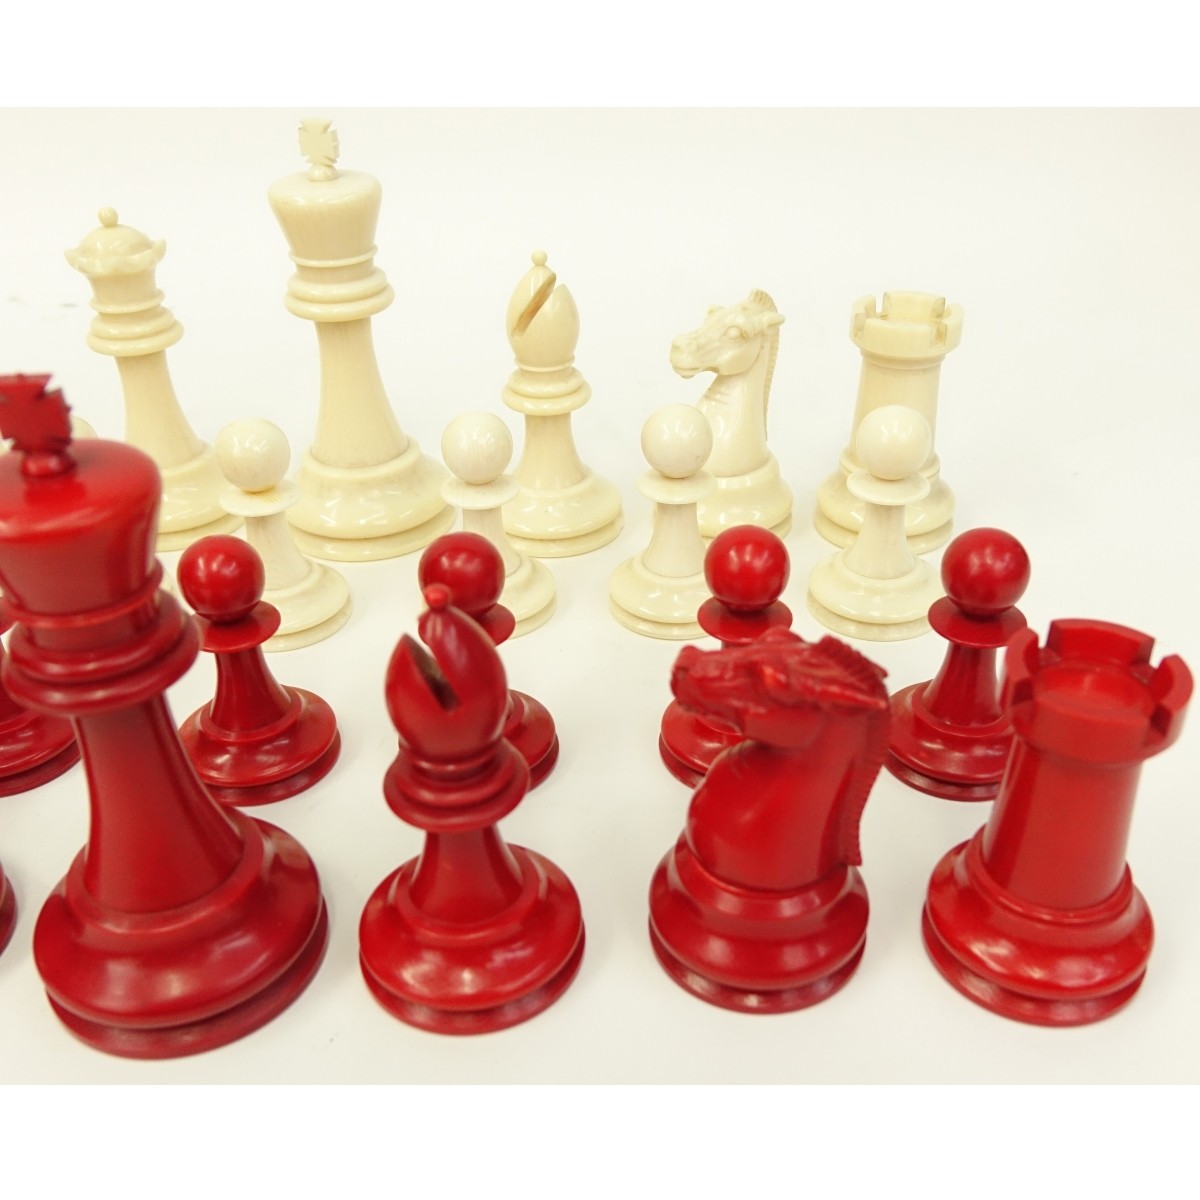 19th Century Staunton Ivory 32 Piece Chess Set